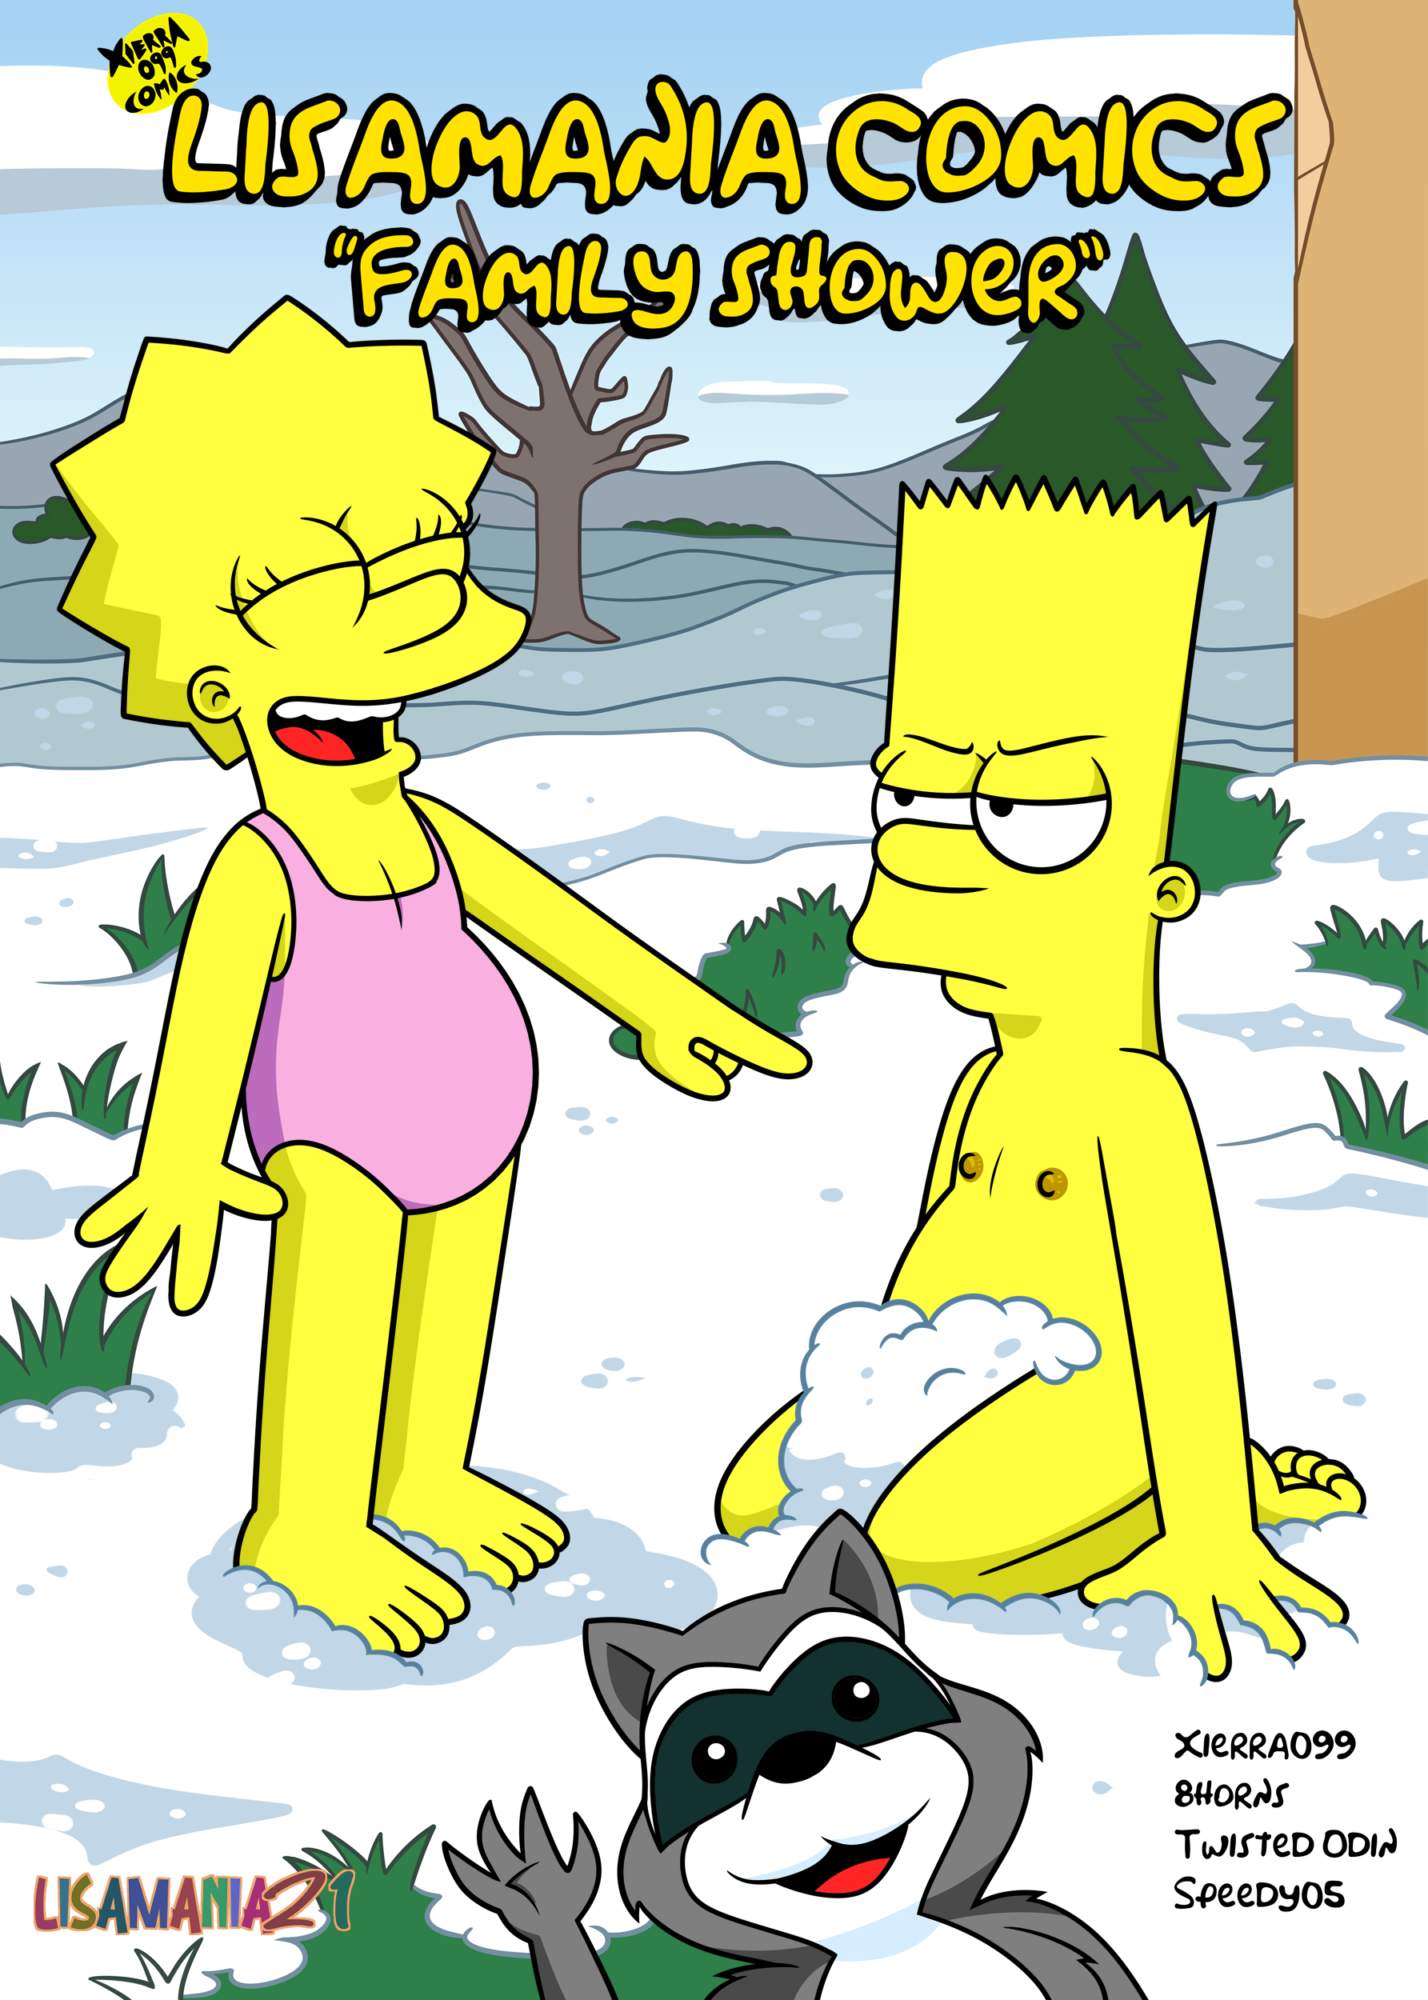 SureFap xxx porno The Simpsons - [LM21][8horns][Twisted Odin][Xierra099] - Family Shower